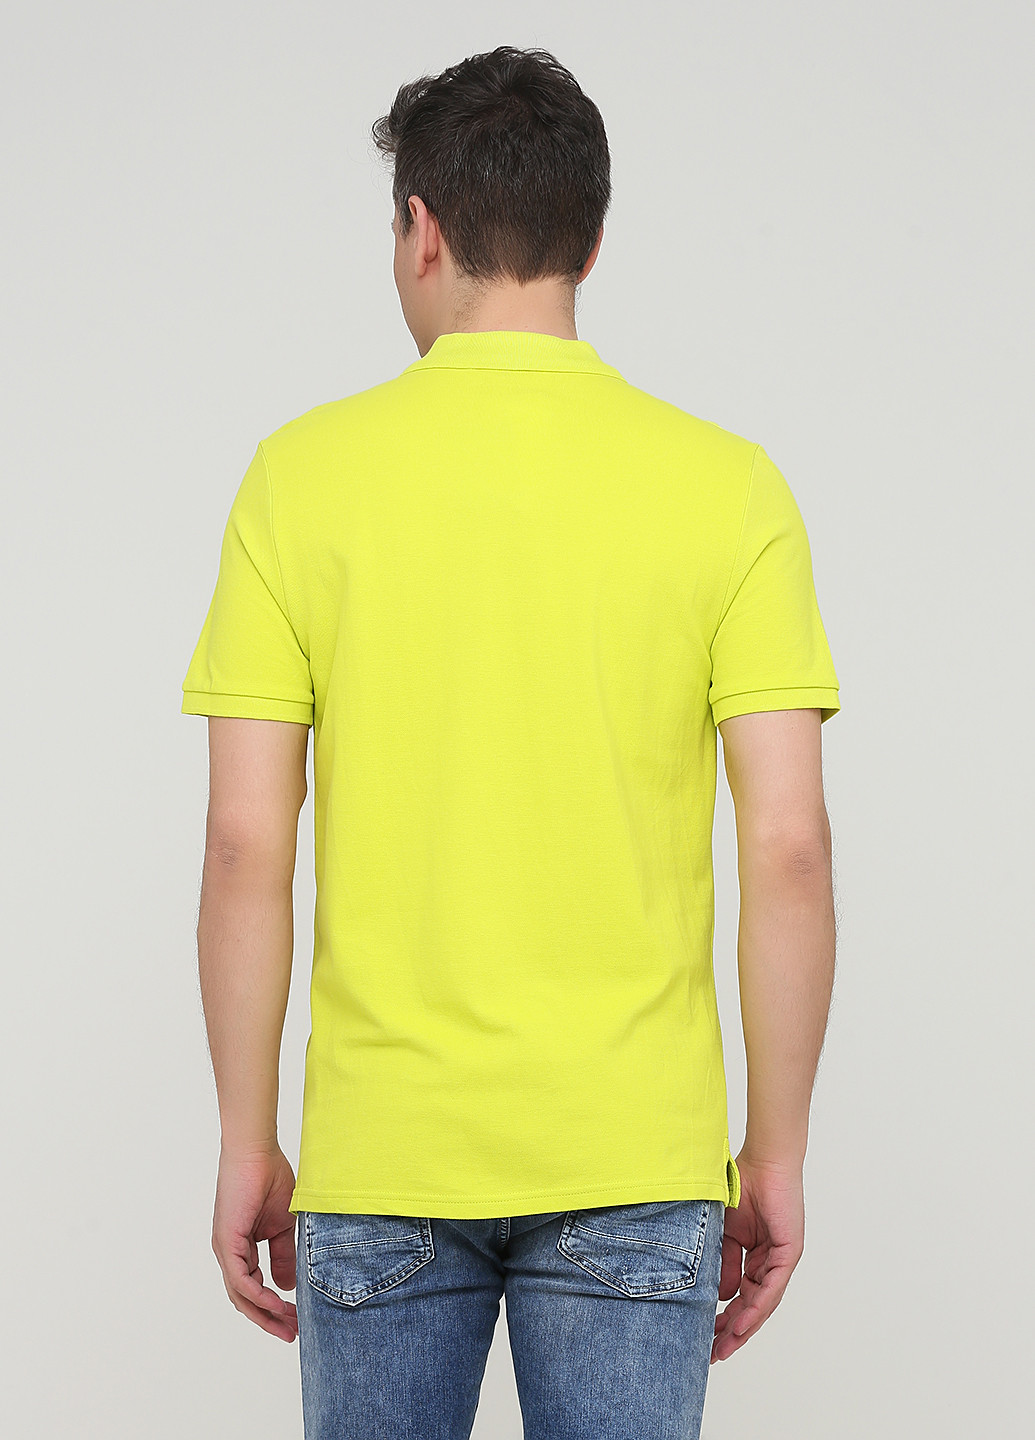 Желтая футболка-поло для мужчин C&A однотонная